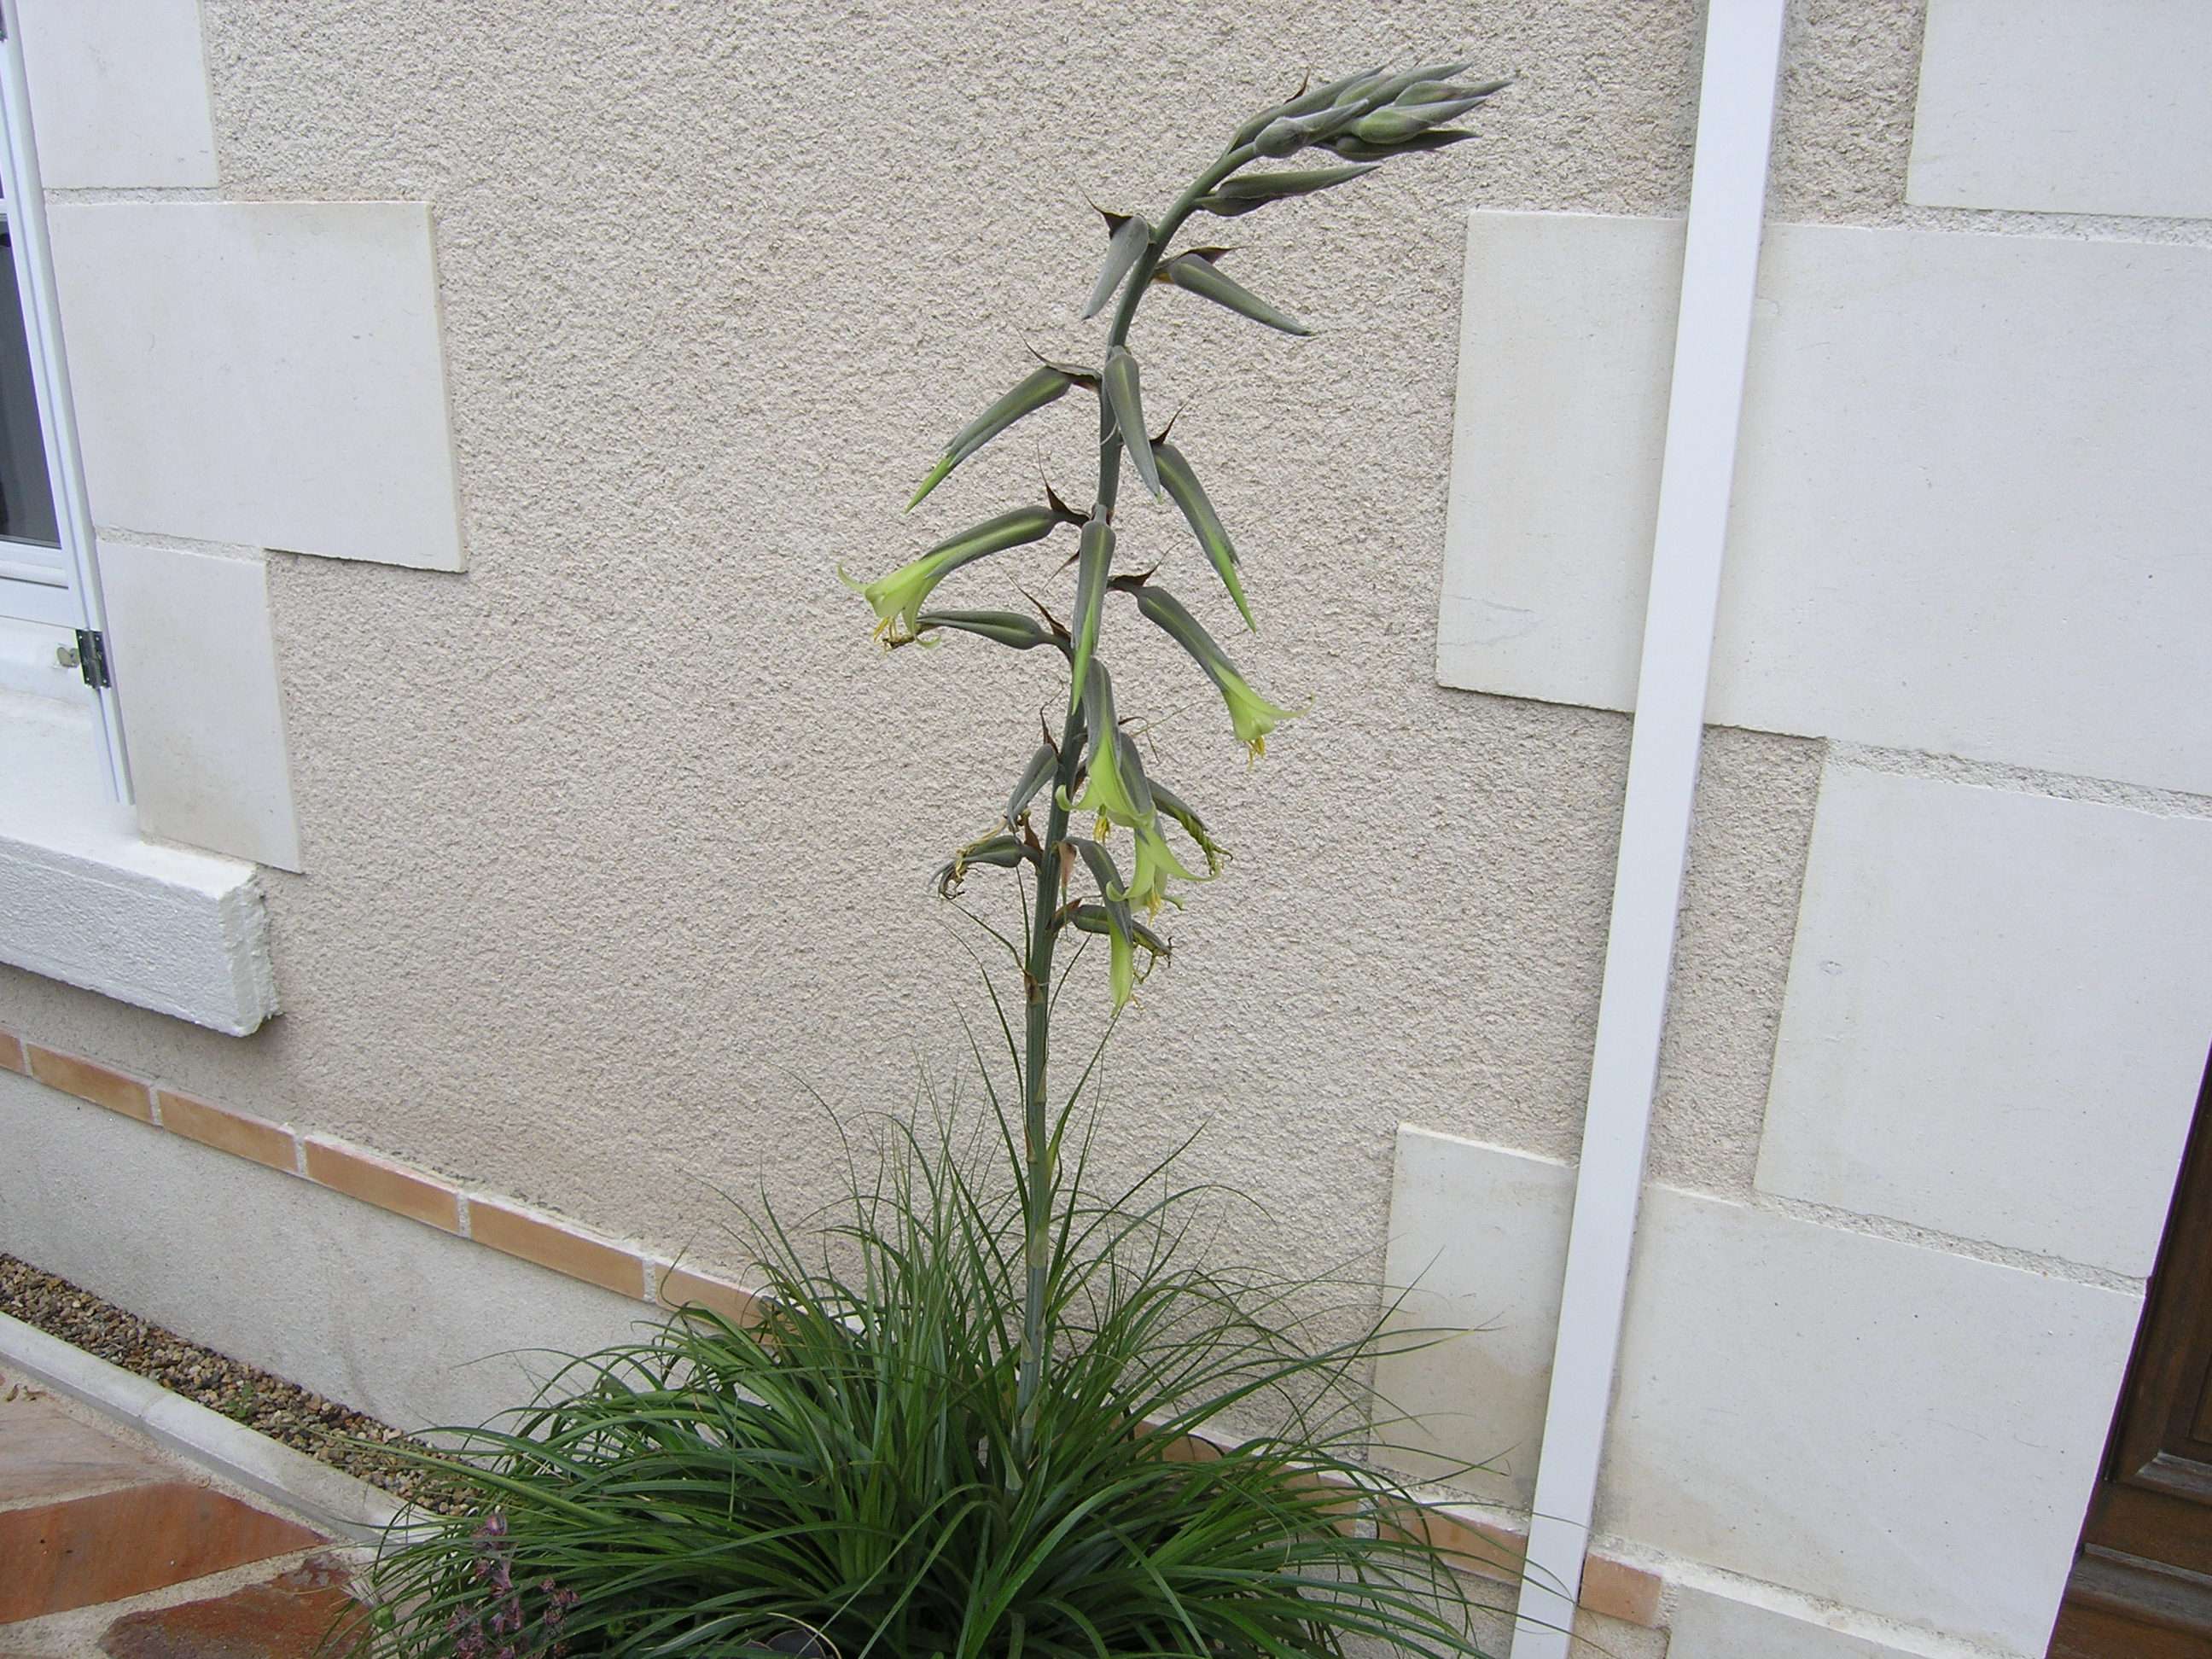 Puya mirabilis